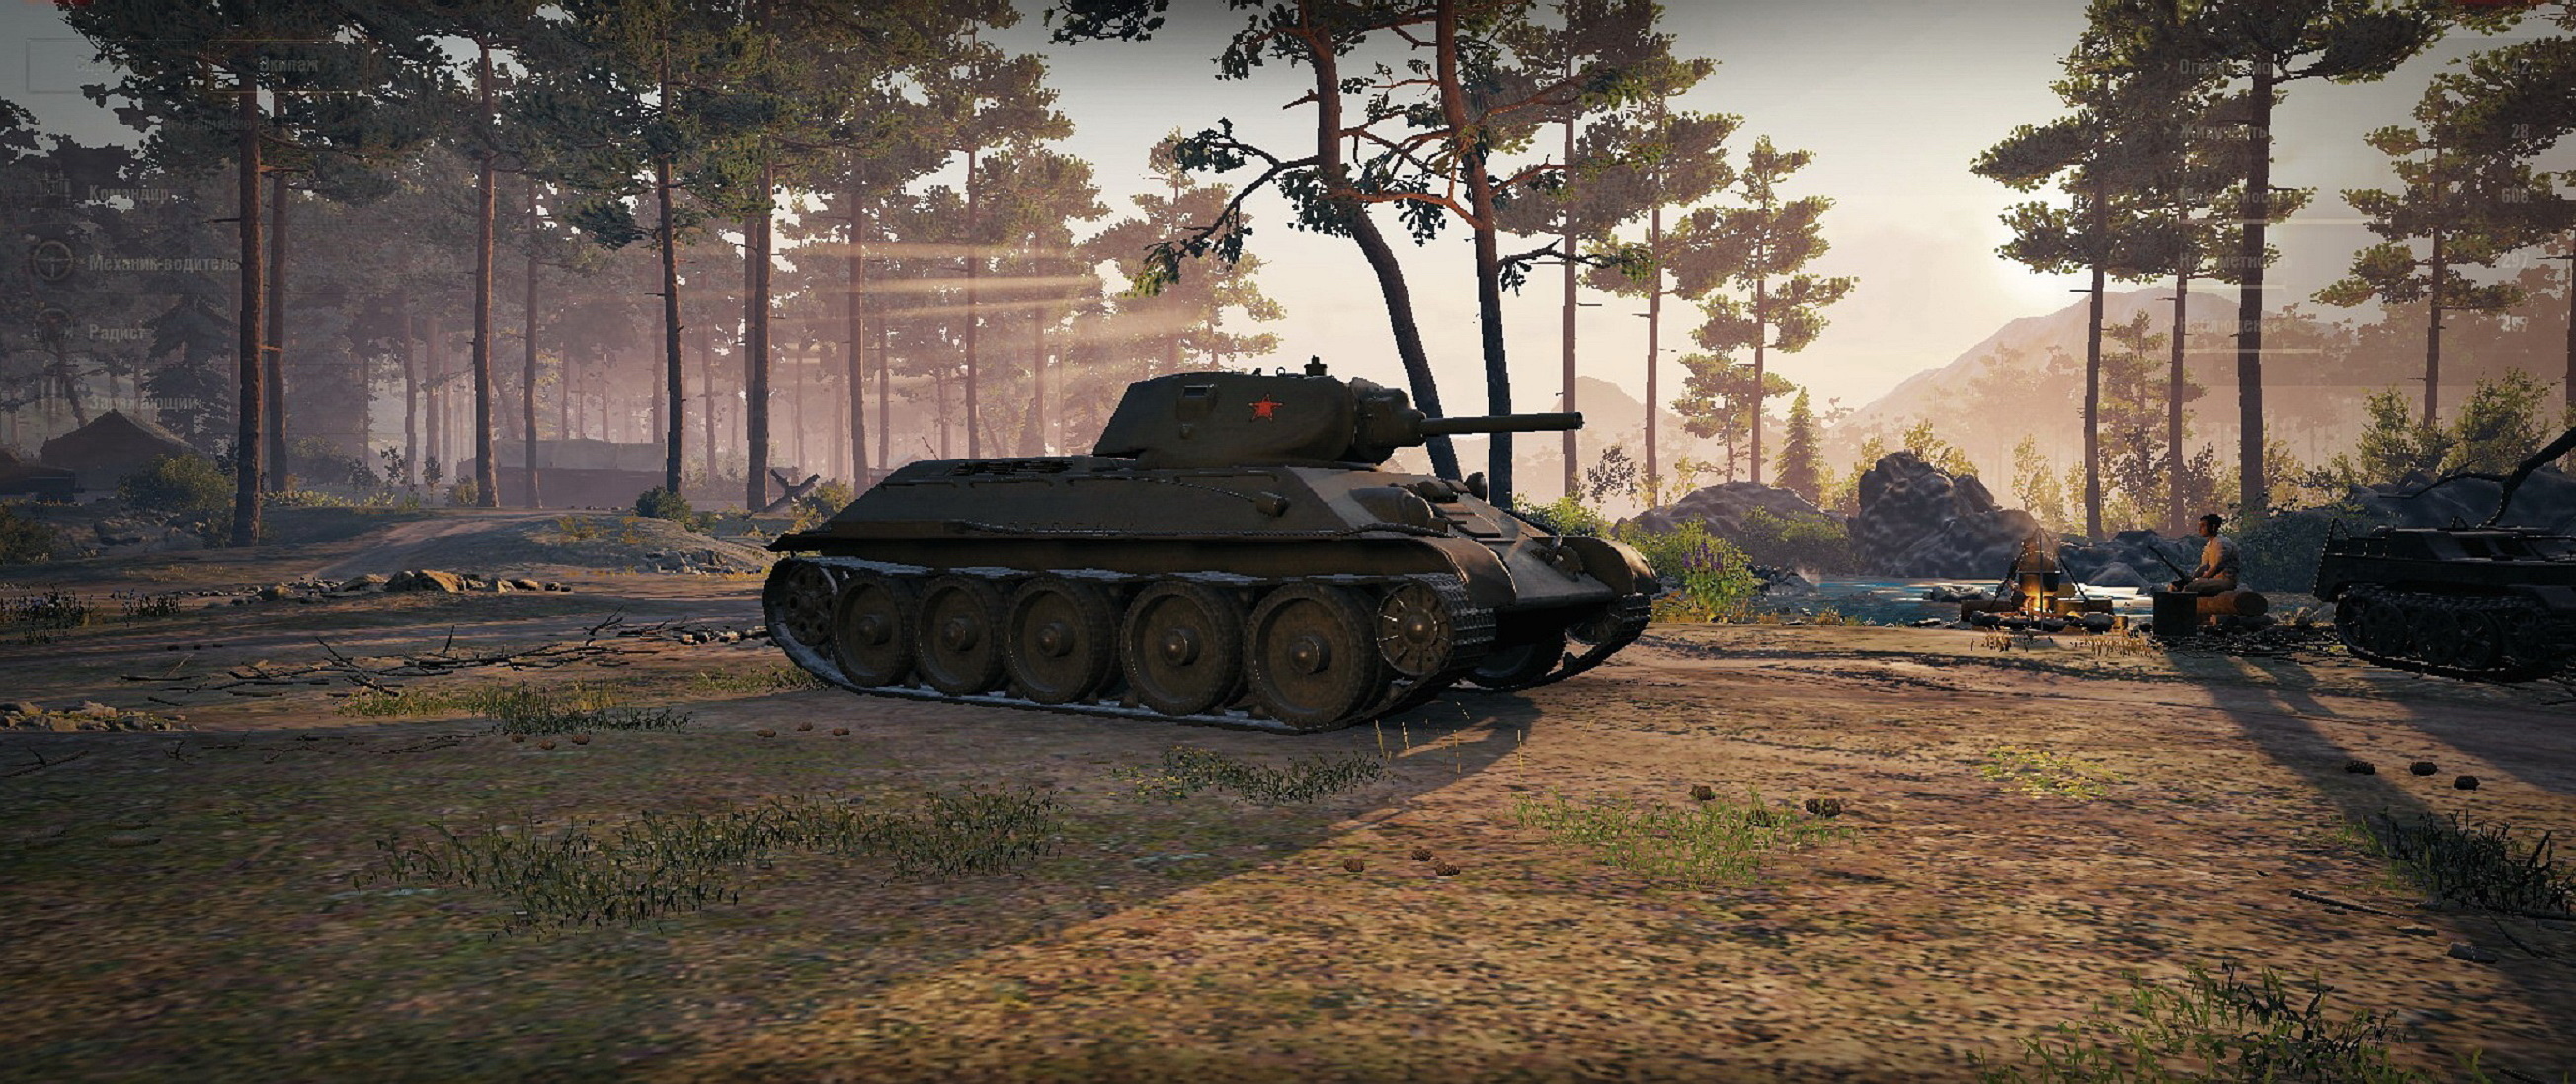 Танк т 34 игра. Танк т-34 ворлд оф танк. Танк т34 WOT. Т 34 76 ворлд оф танк. Т-34 танк СССР World of Tanks.